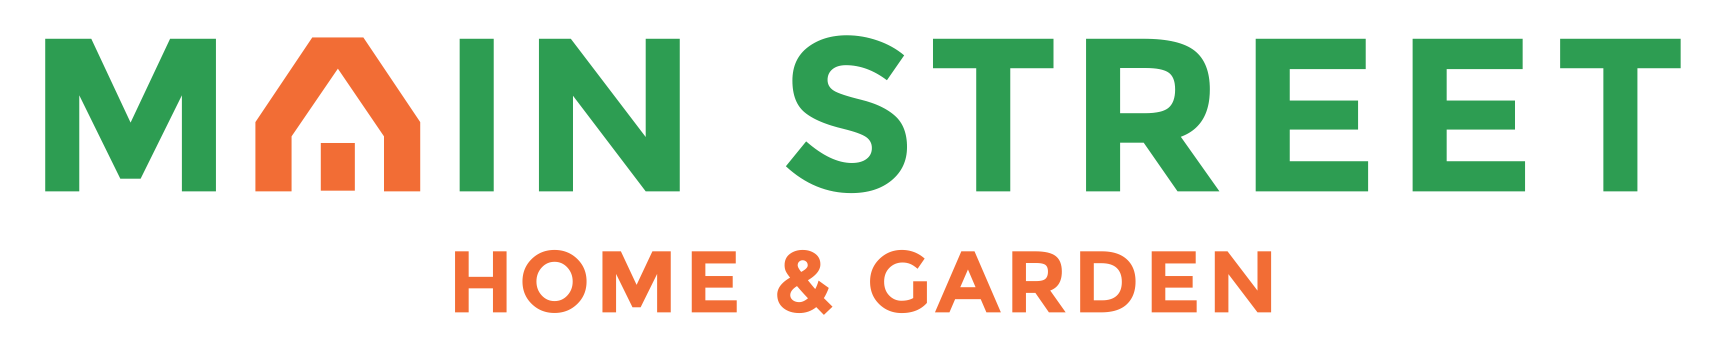 Main Street Home & Garden Company, Inc. Logo